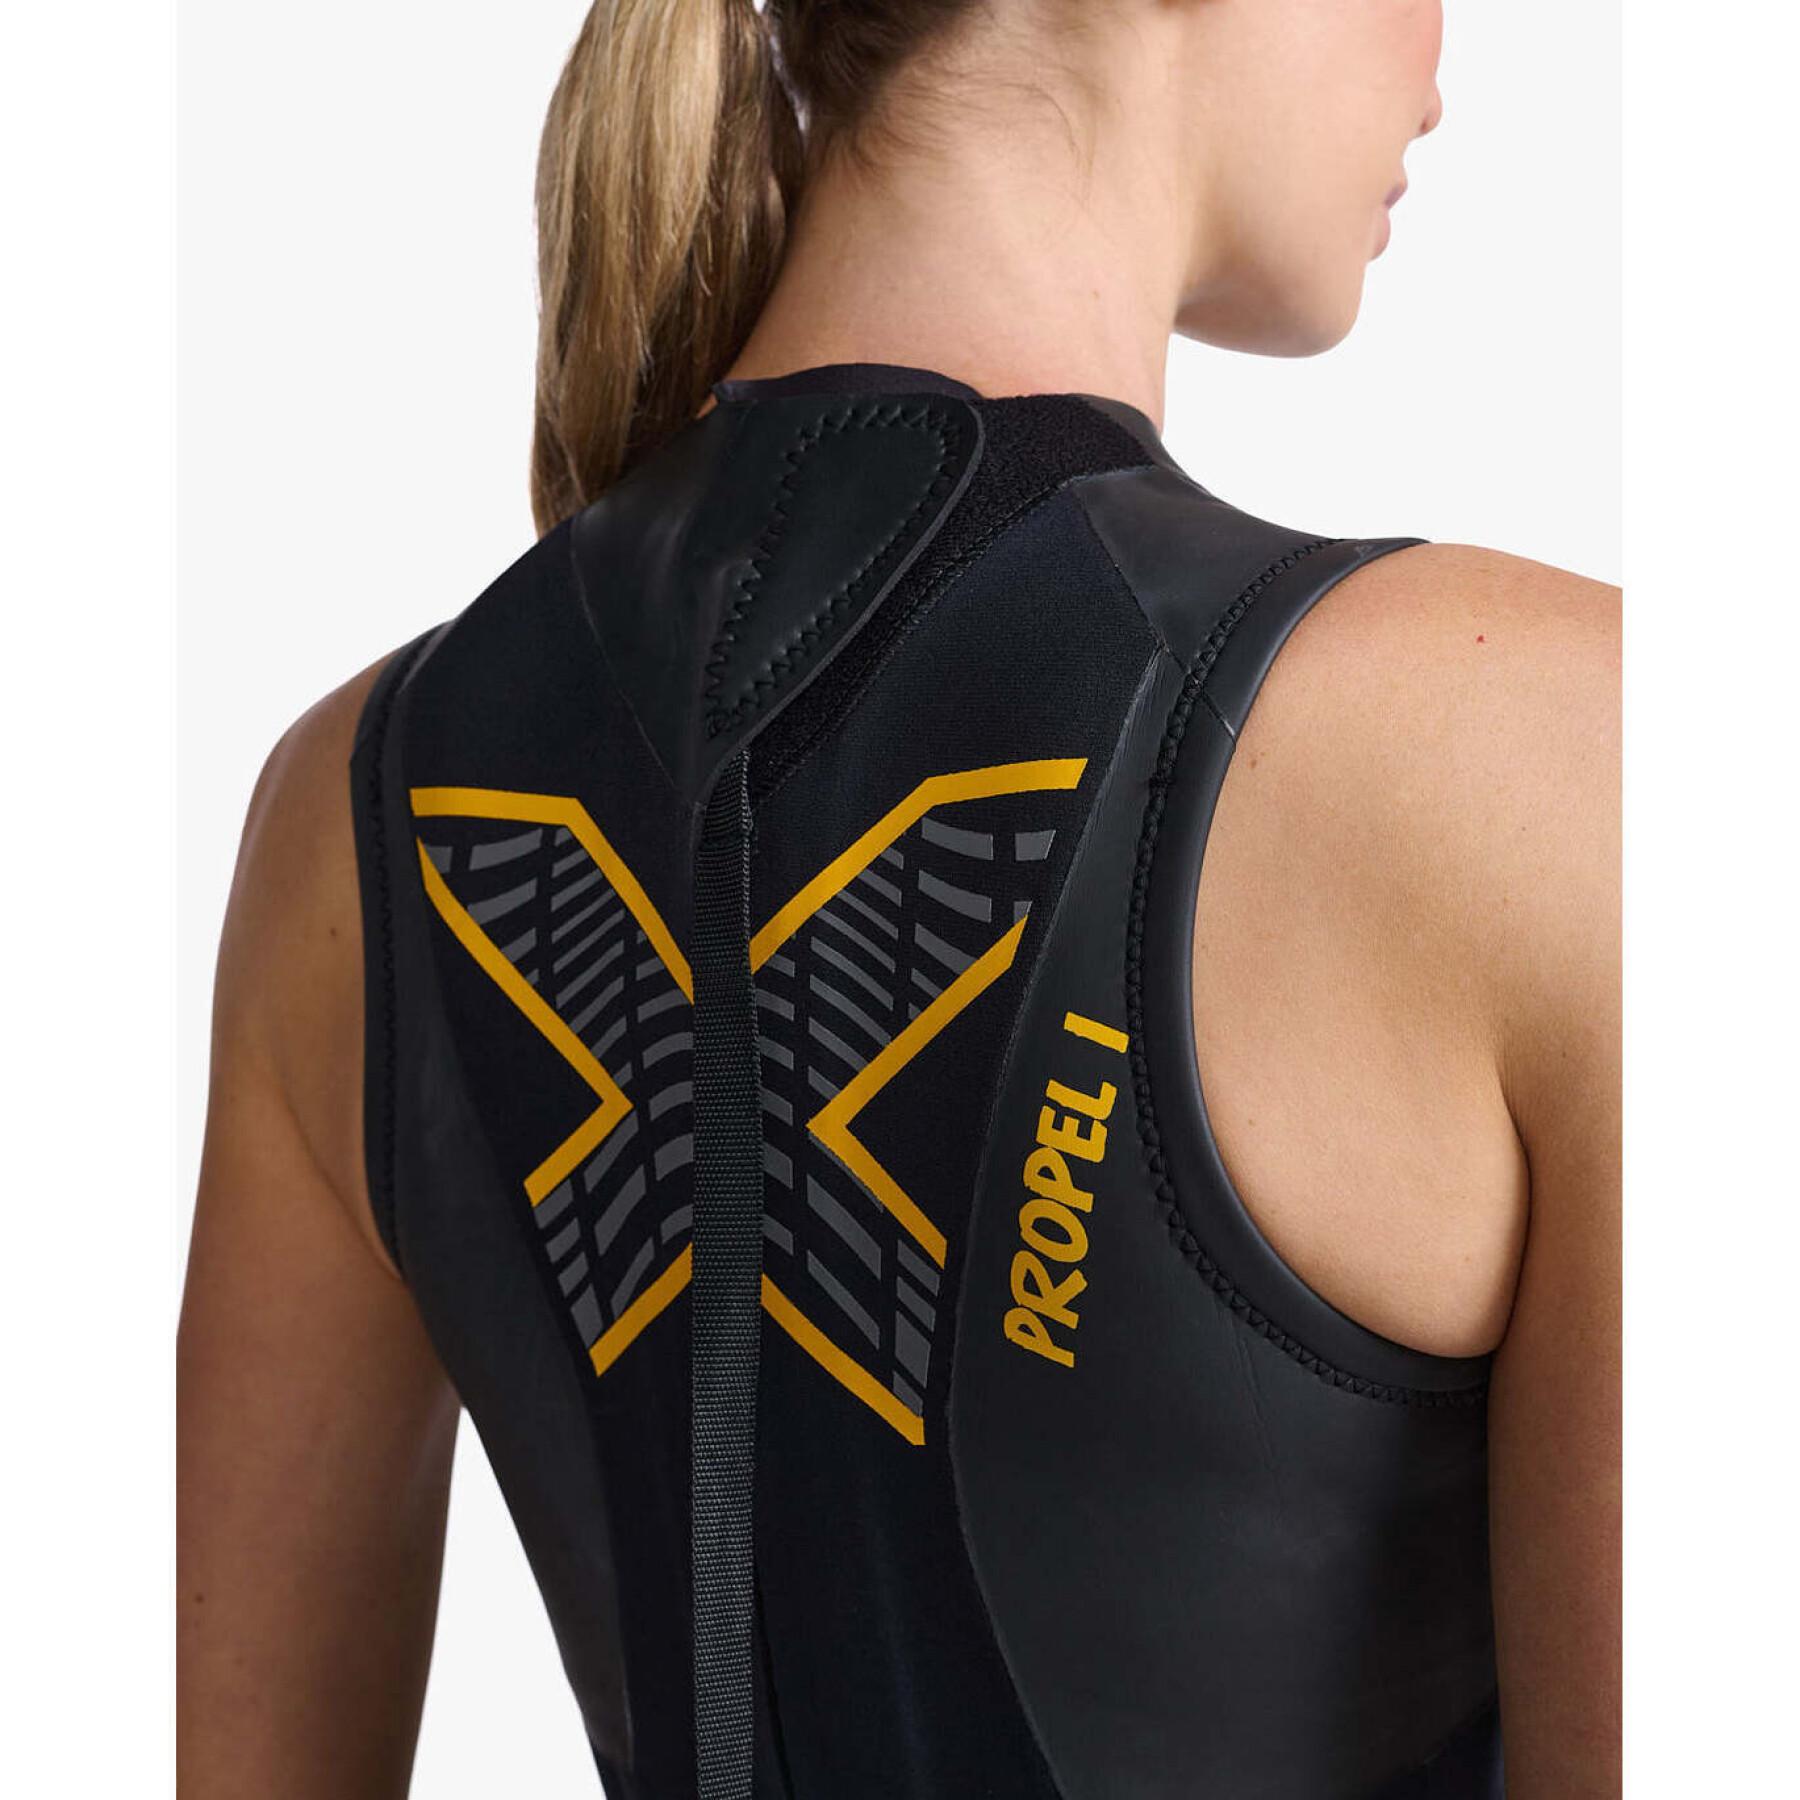 Women's sleeveless wetsuit 2XU P:1 Propel